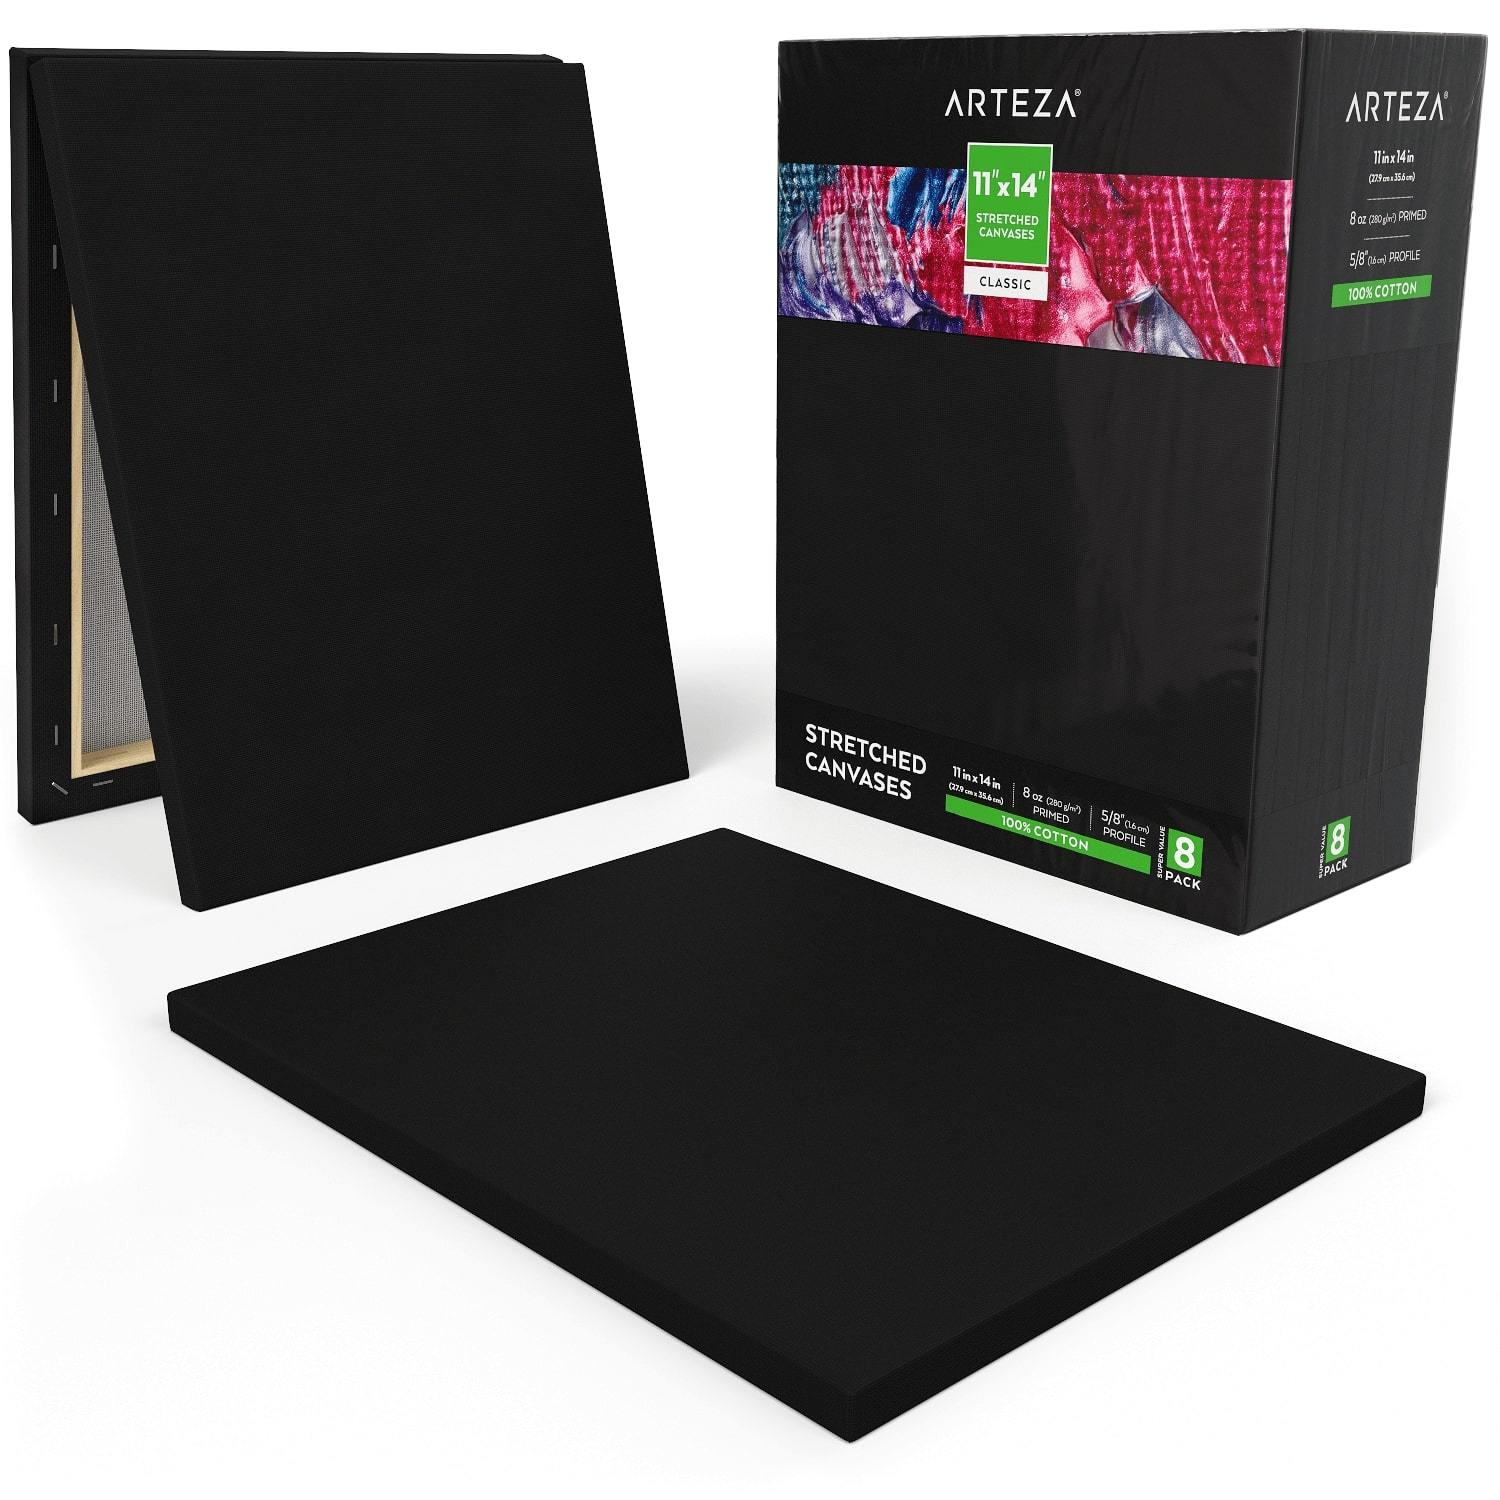  Zingarts Black Canvas,11x14 Inch 6-Pack, 100% Cotton